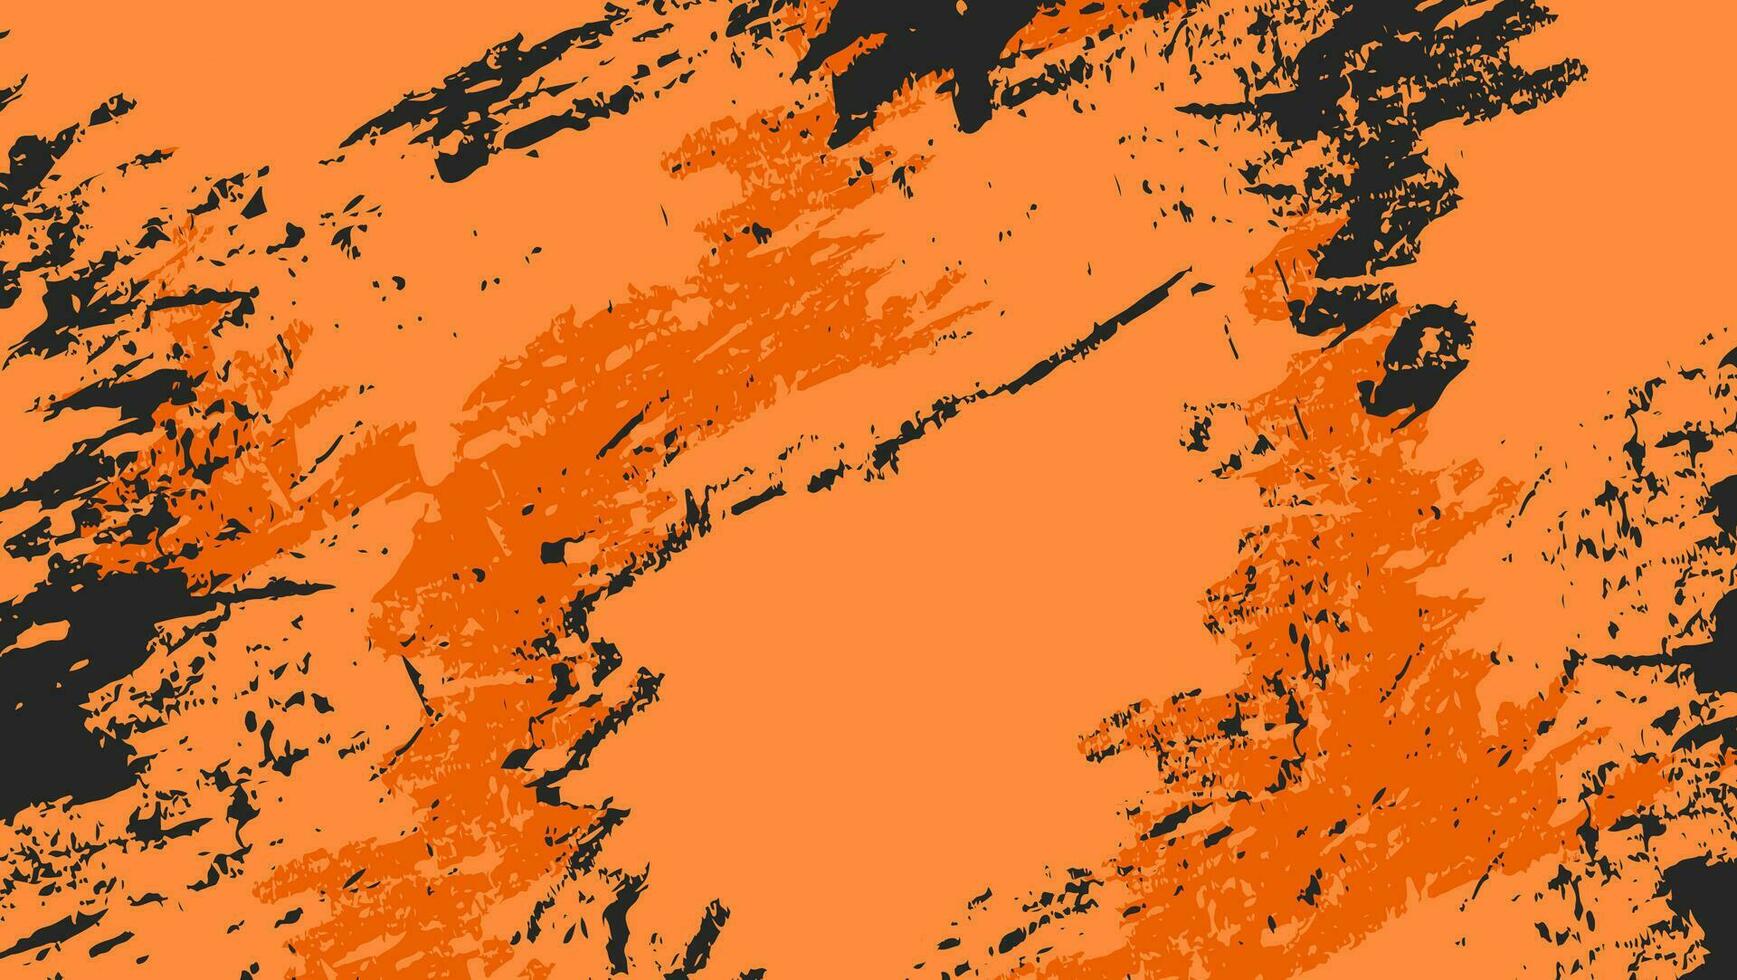 Abstract Orange Grunge Rough Texture In Black Background vector